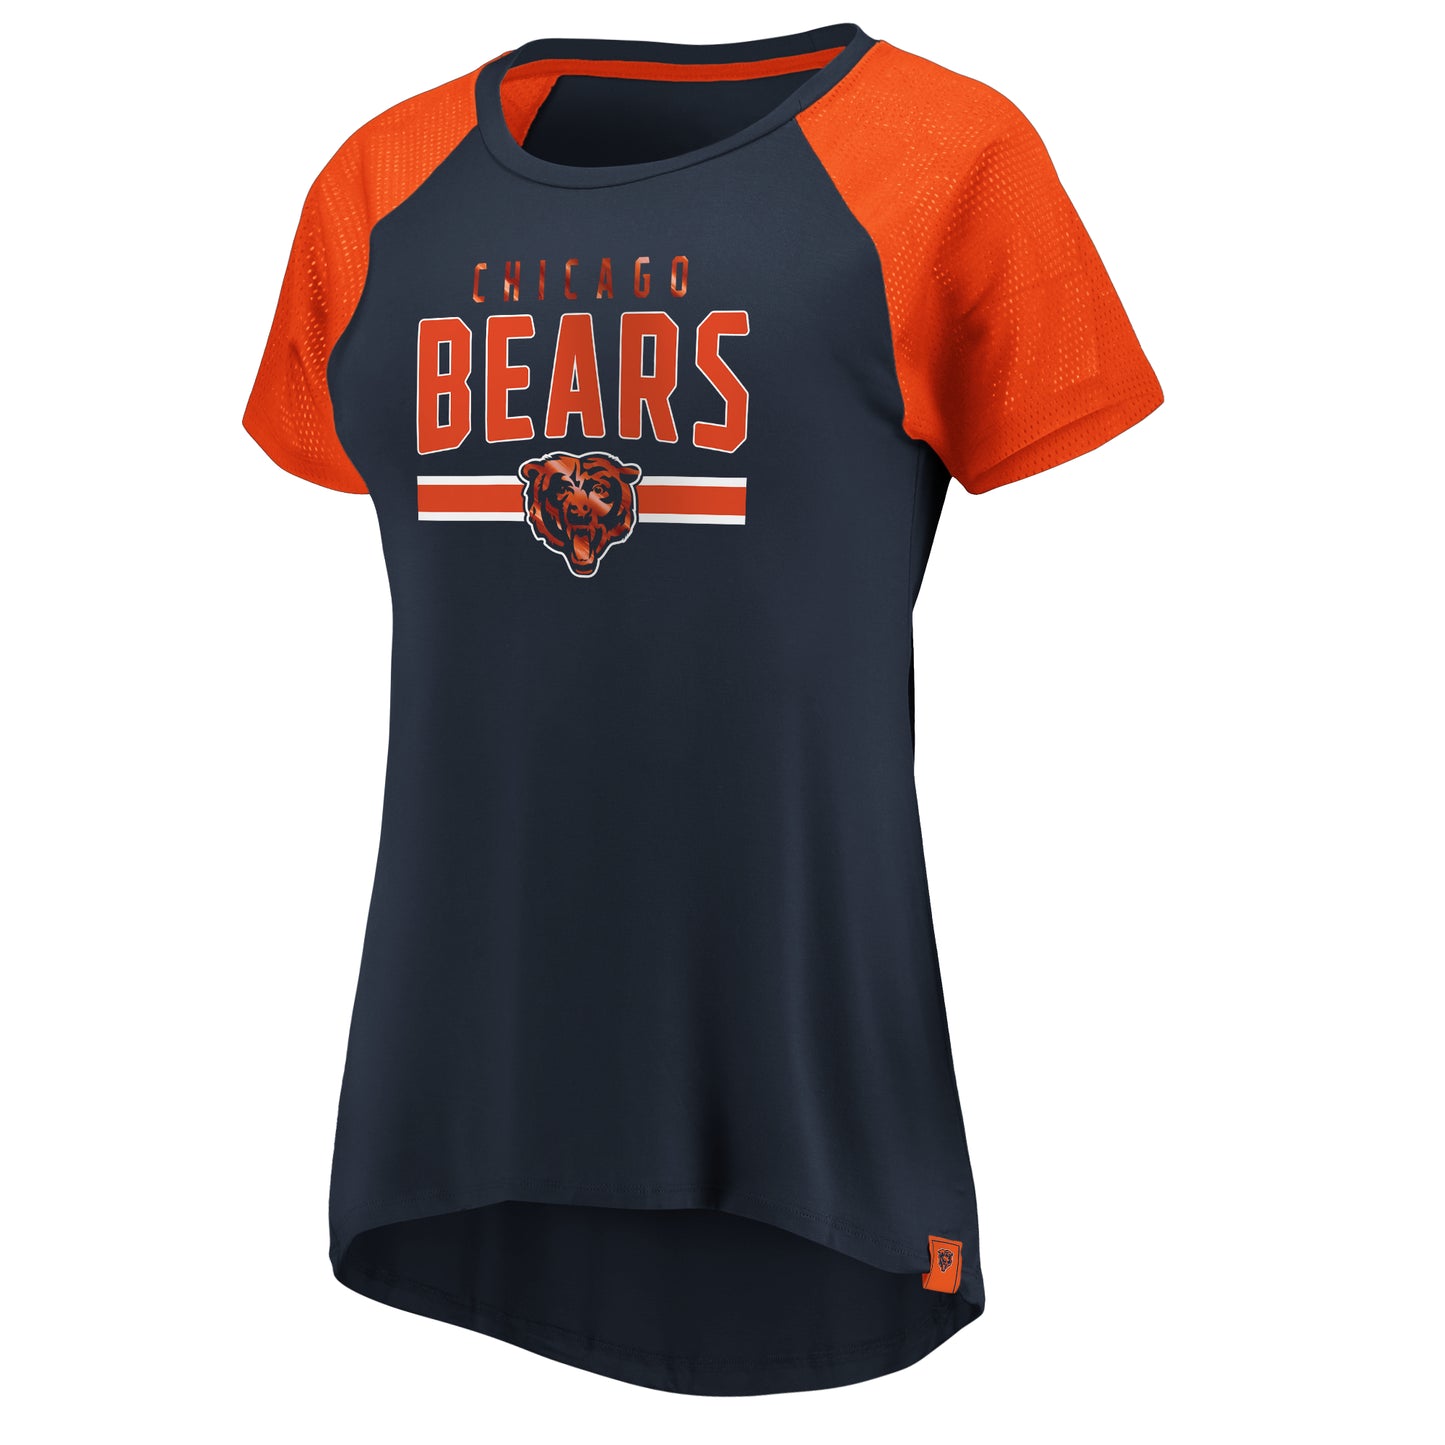 Women's Chicago Bears Fanatics Branded Navy/Orange Shining Victory T-Shirt